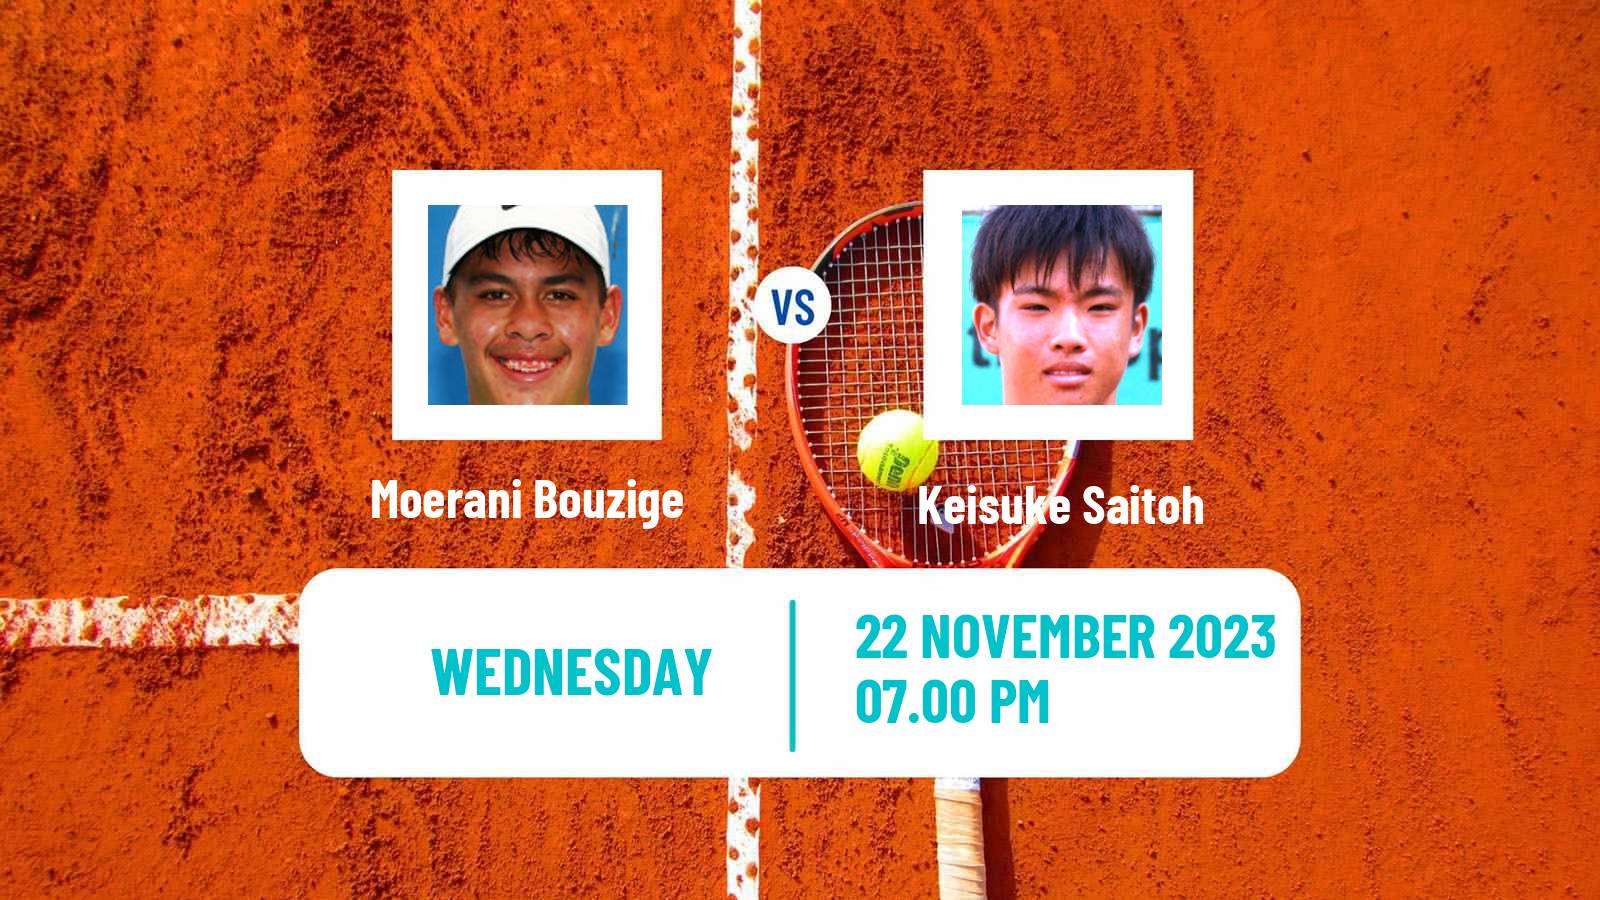 Tennis ITF M25 Brisbane Men Moerani Bouzige - Keisuke Saitoh